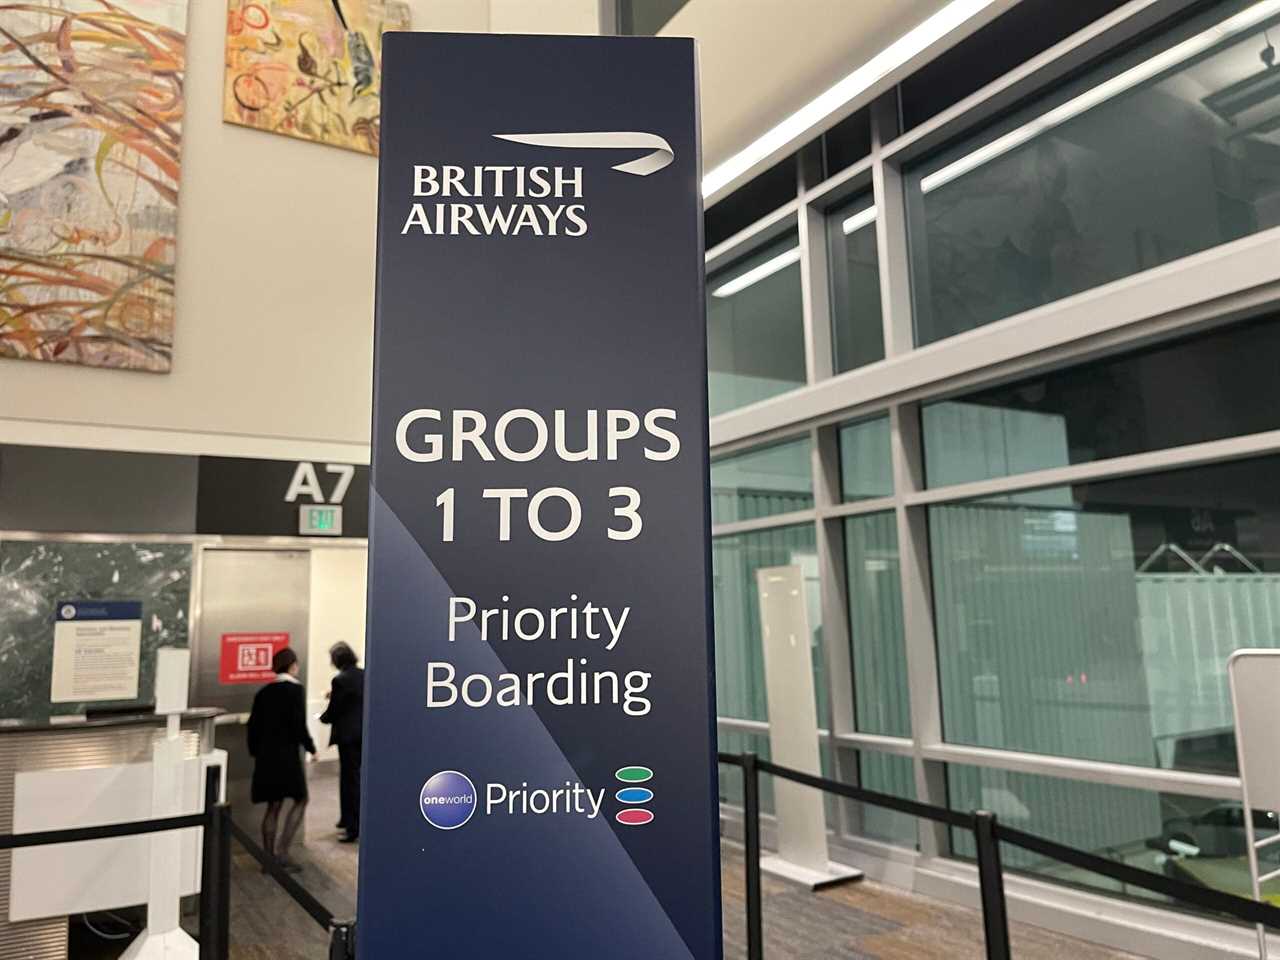 British Airways priority boarding groups